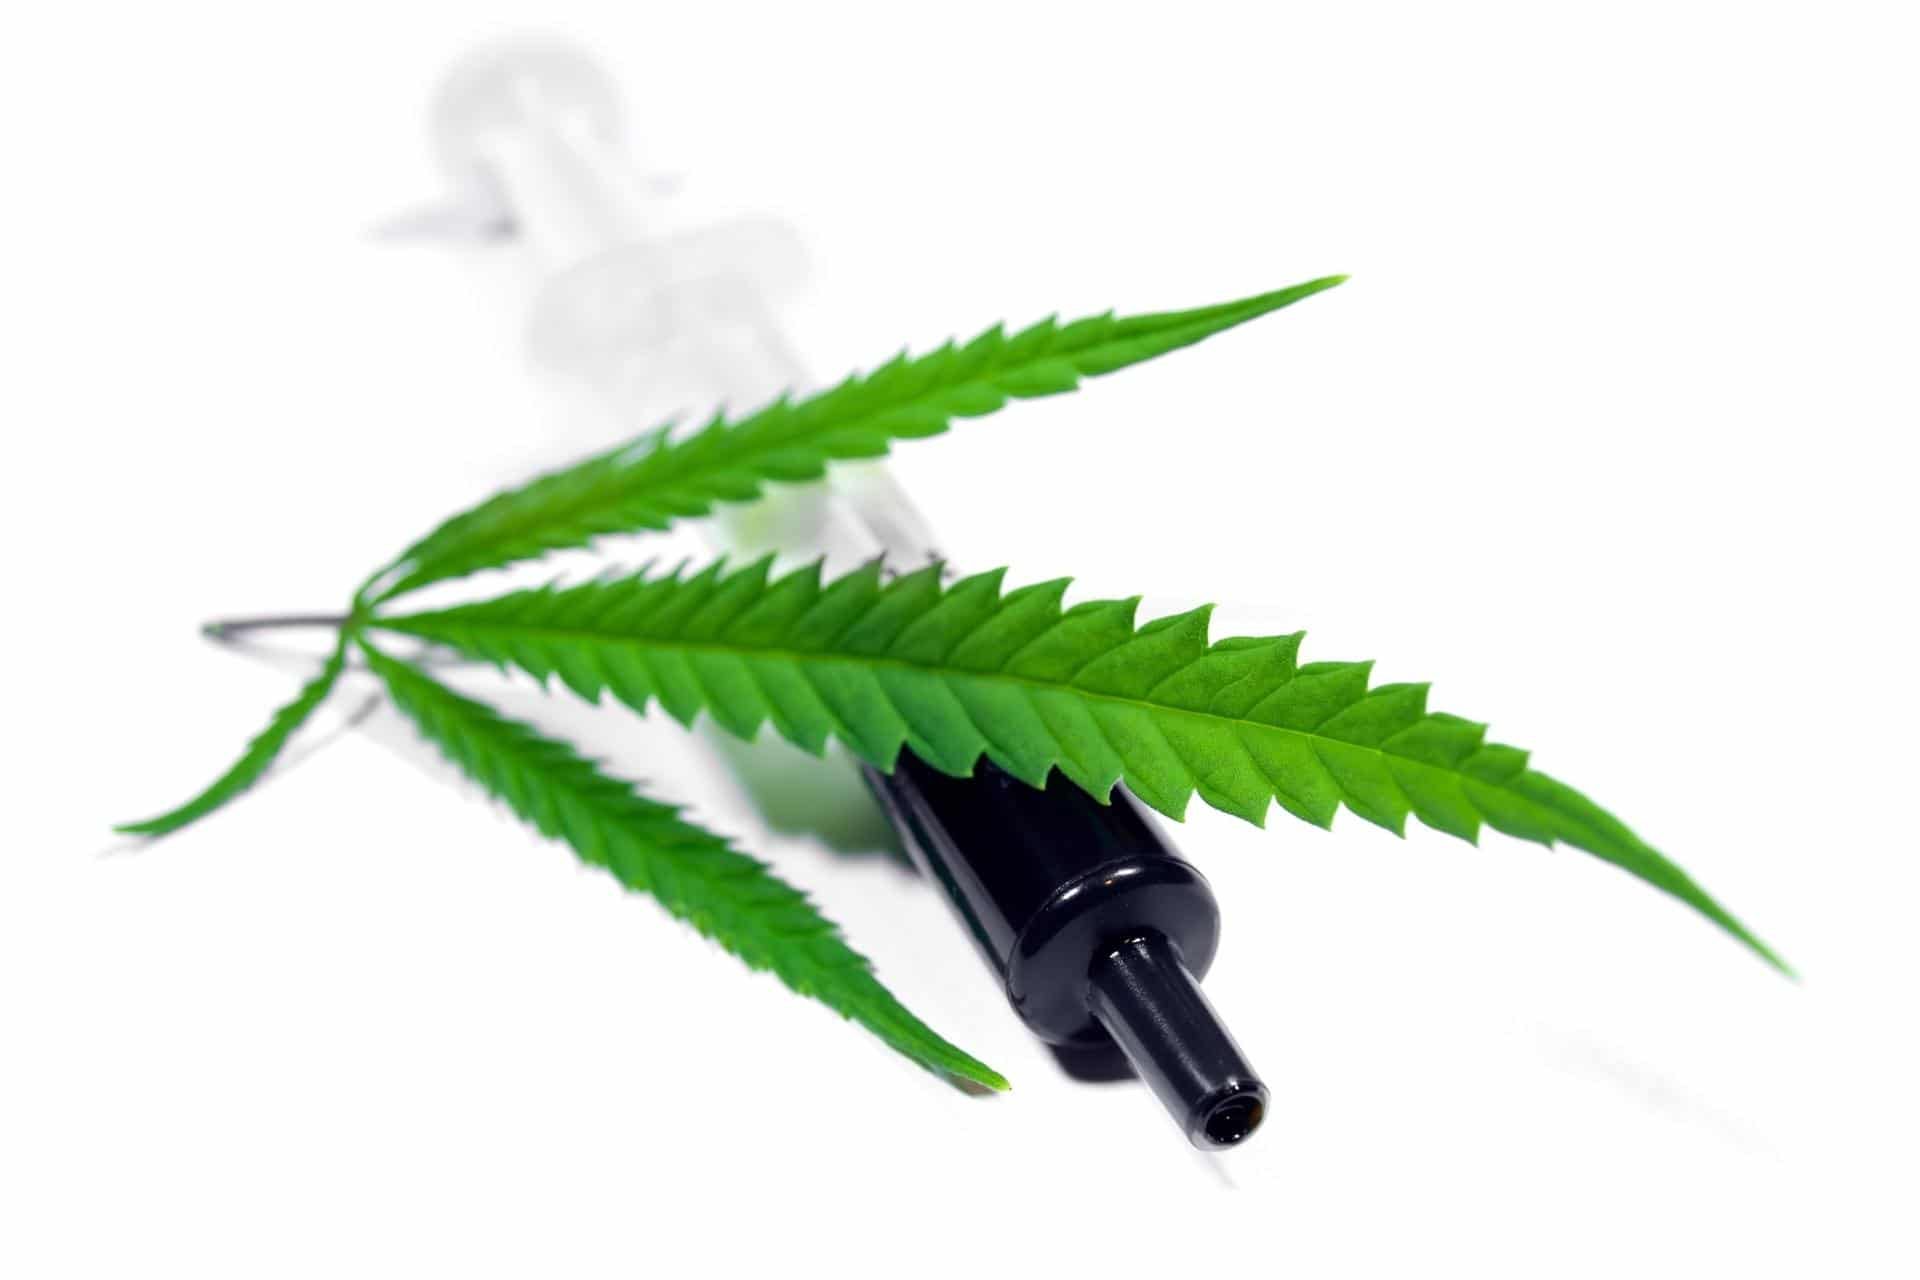 RSO cannabis oil syringe and cannabis leaf.